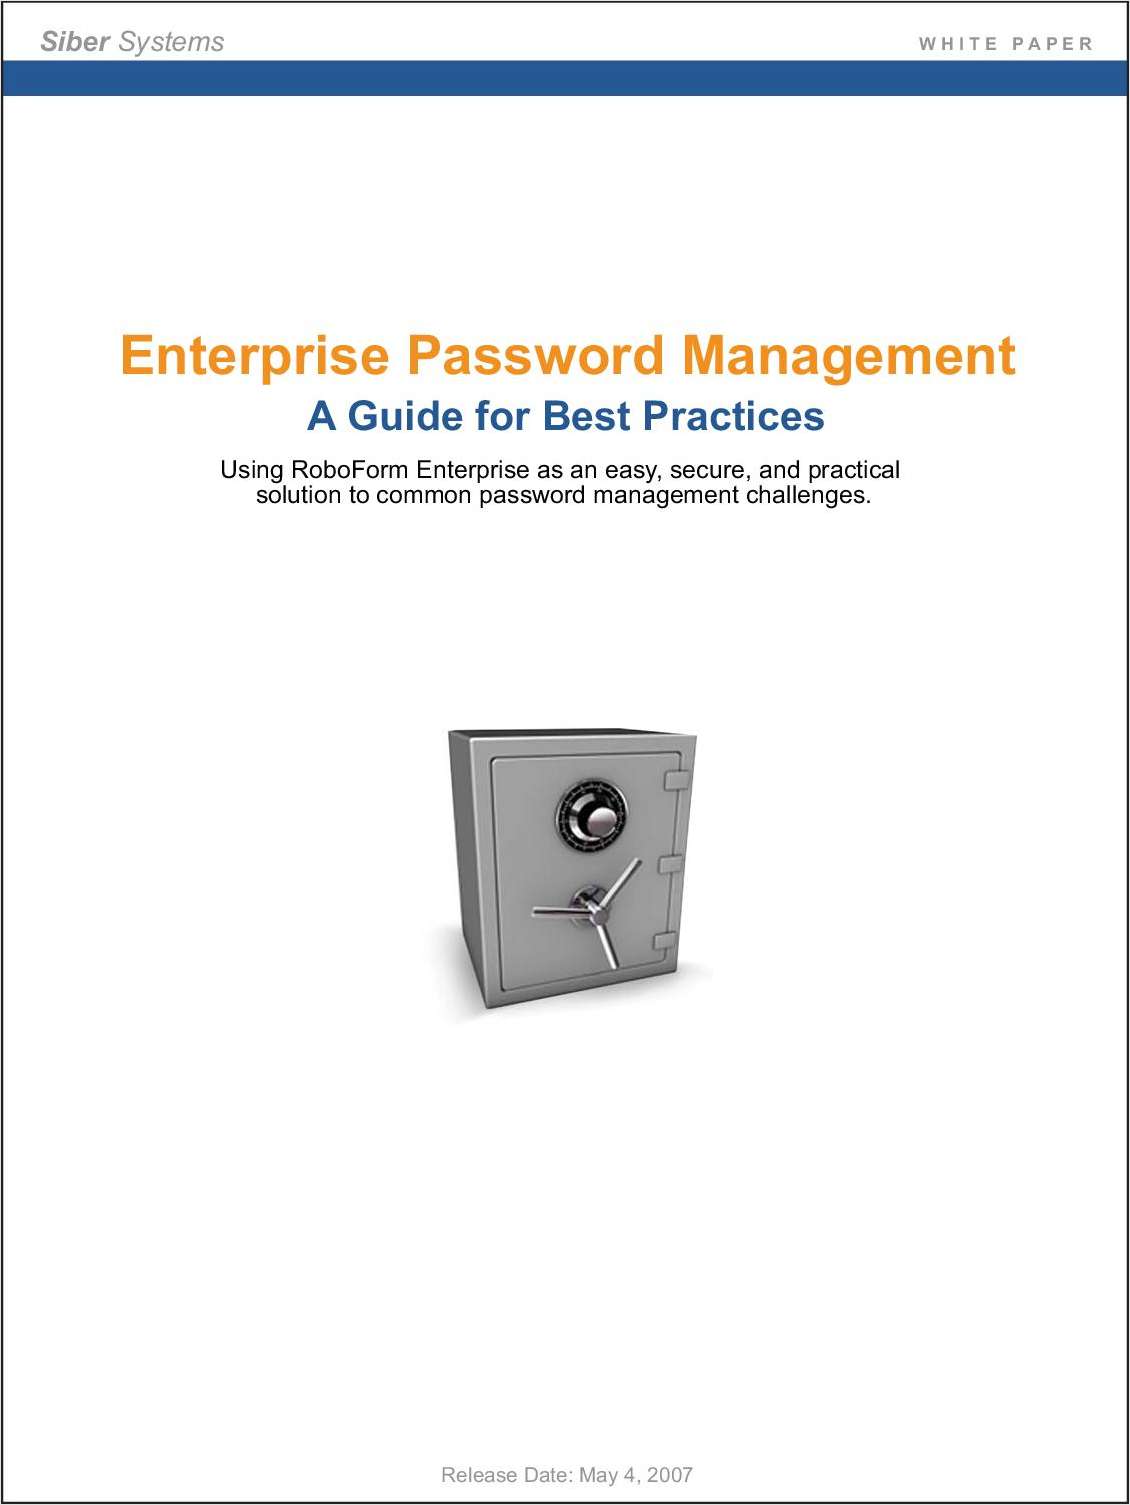 Enterprise Password Management - A Guide for Best Practices